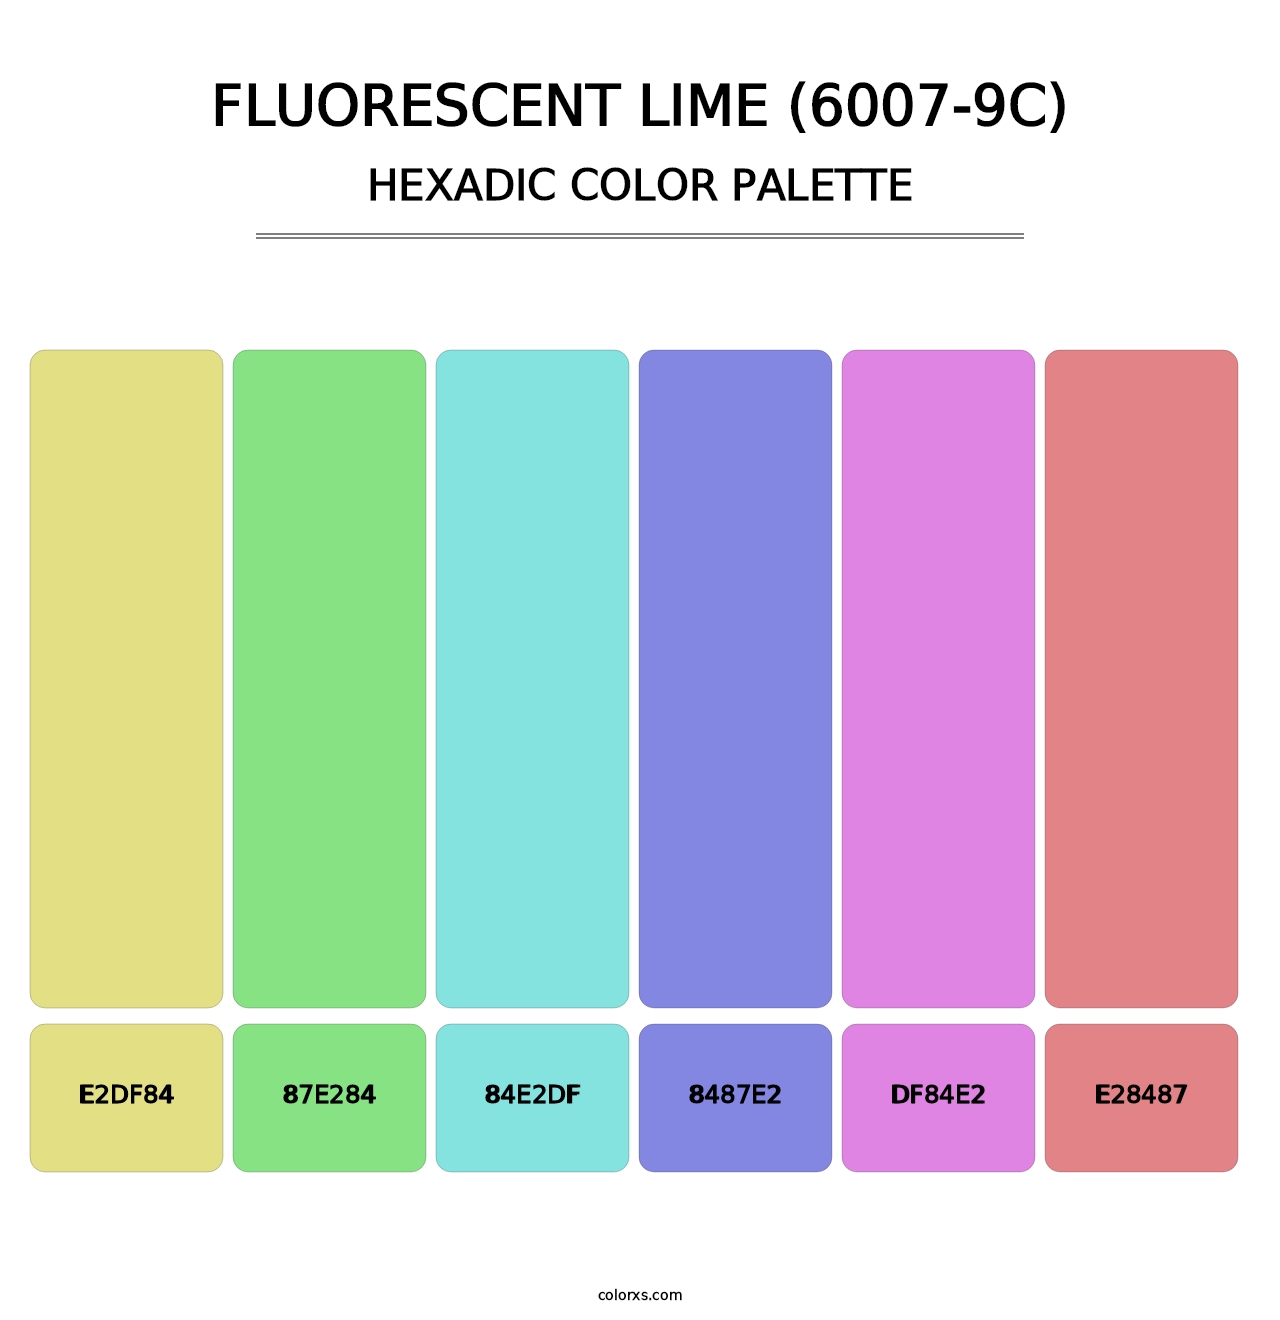 Fluorescent Lime (6007-9C) - Hexadic Color Palette